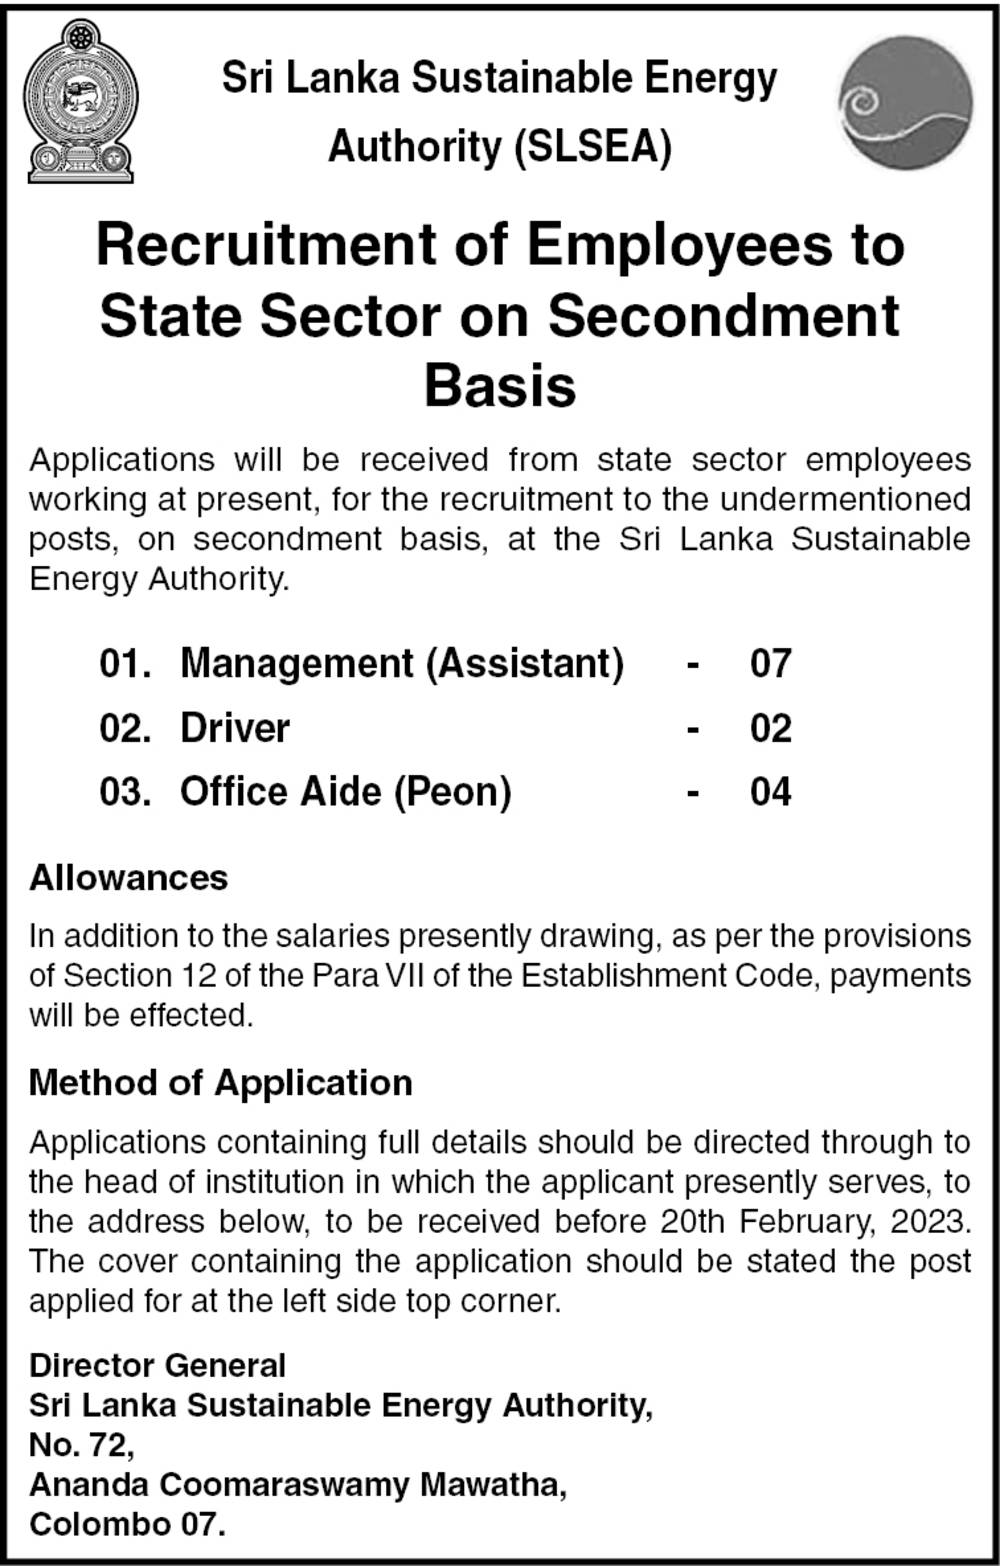 Office Assistant (Peon) Jobs in Sri Lanka 2023